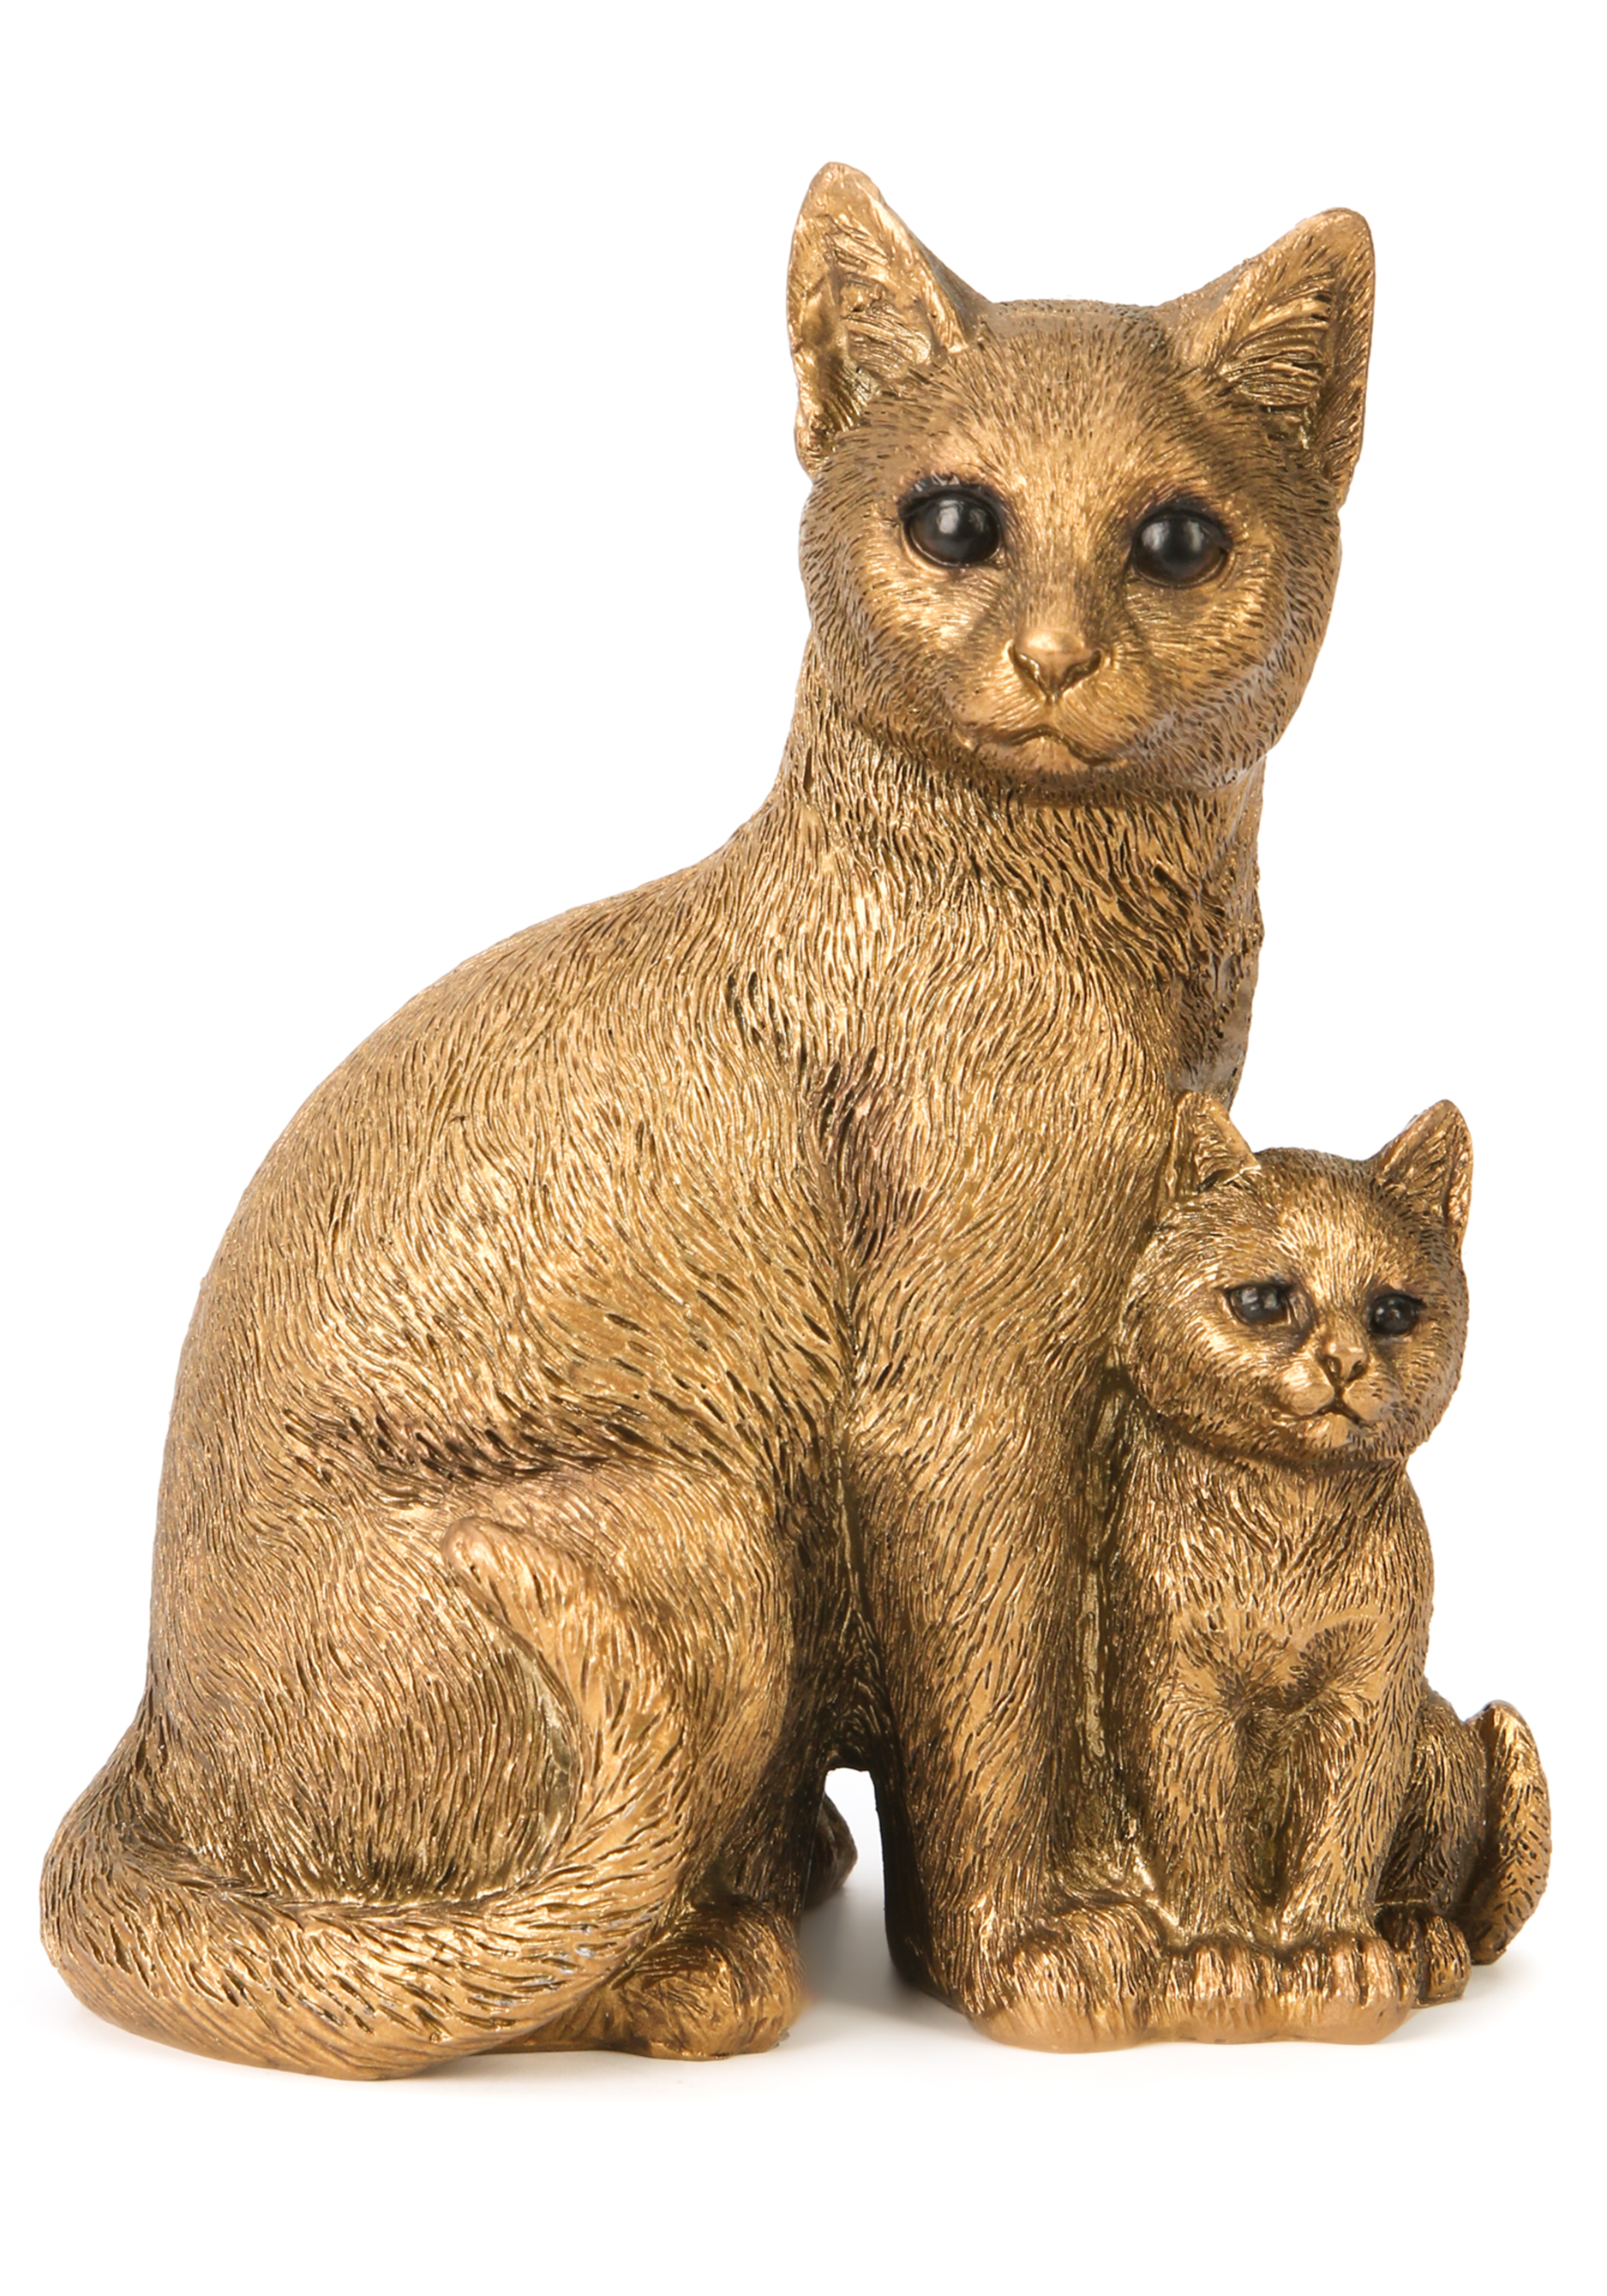 Статуэтка "Кошачий оберег" Lefard, цвет коричневый, размер 11*7 - фото 1